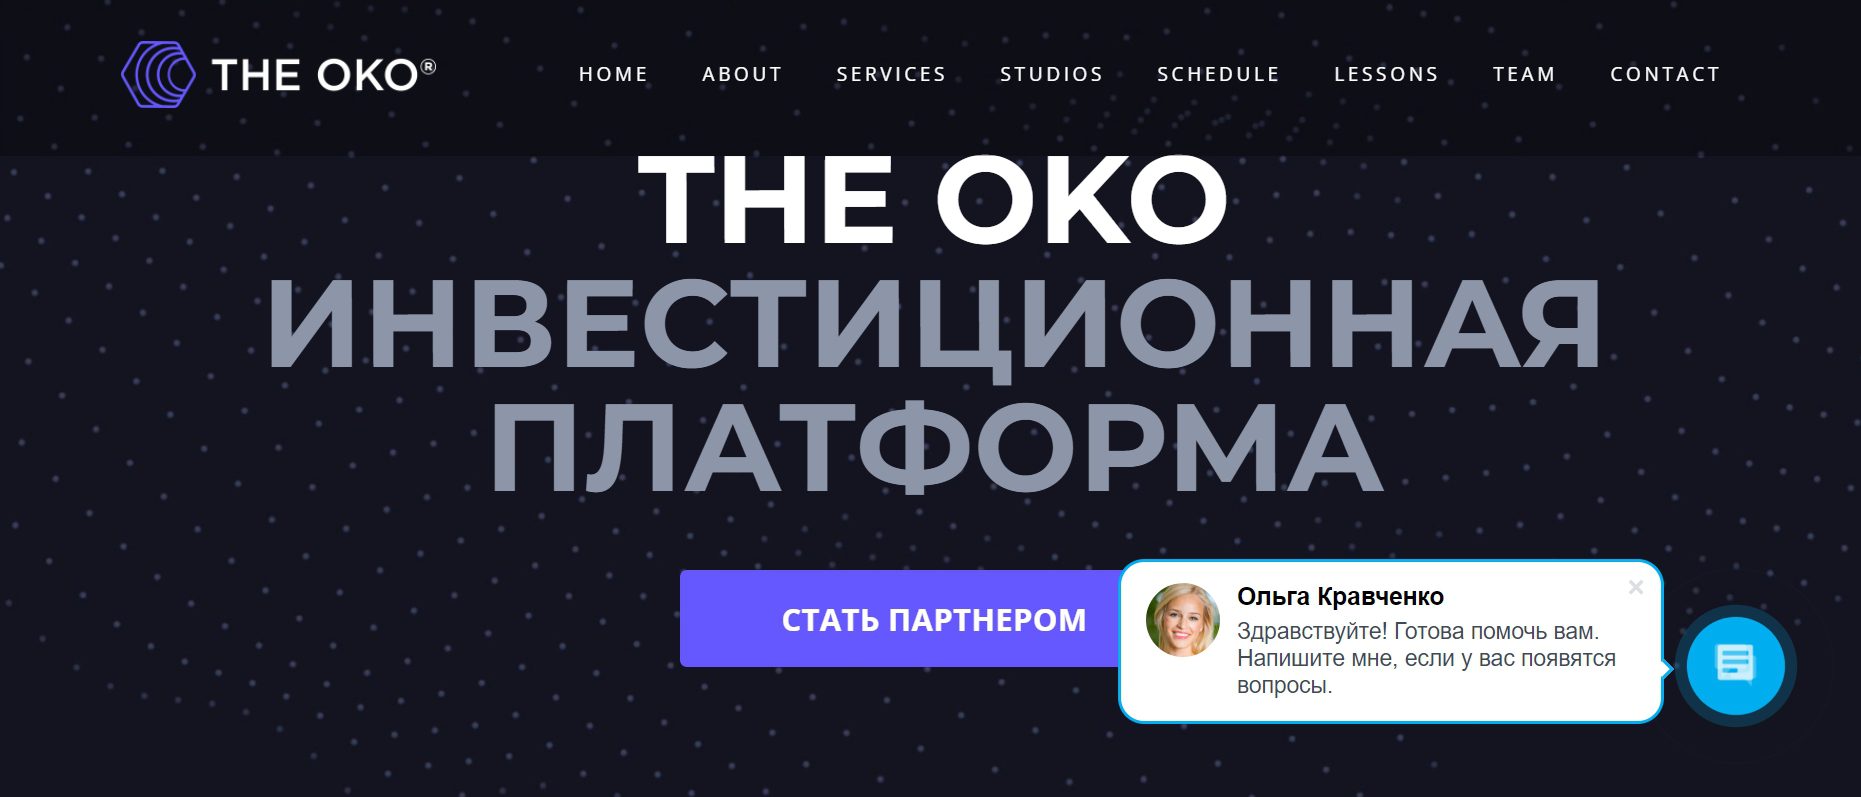 Сайт проекта The oko vip